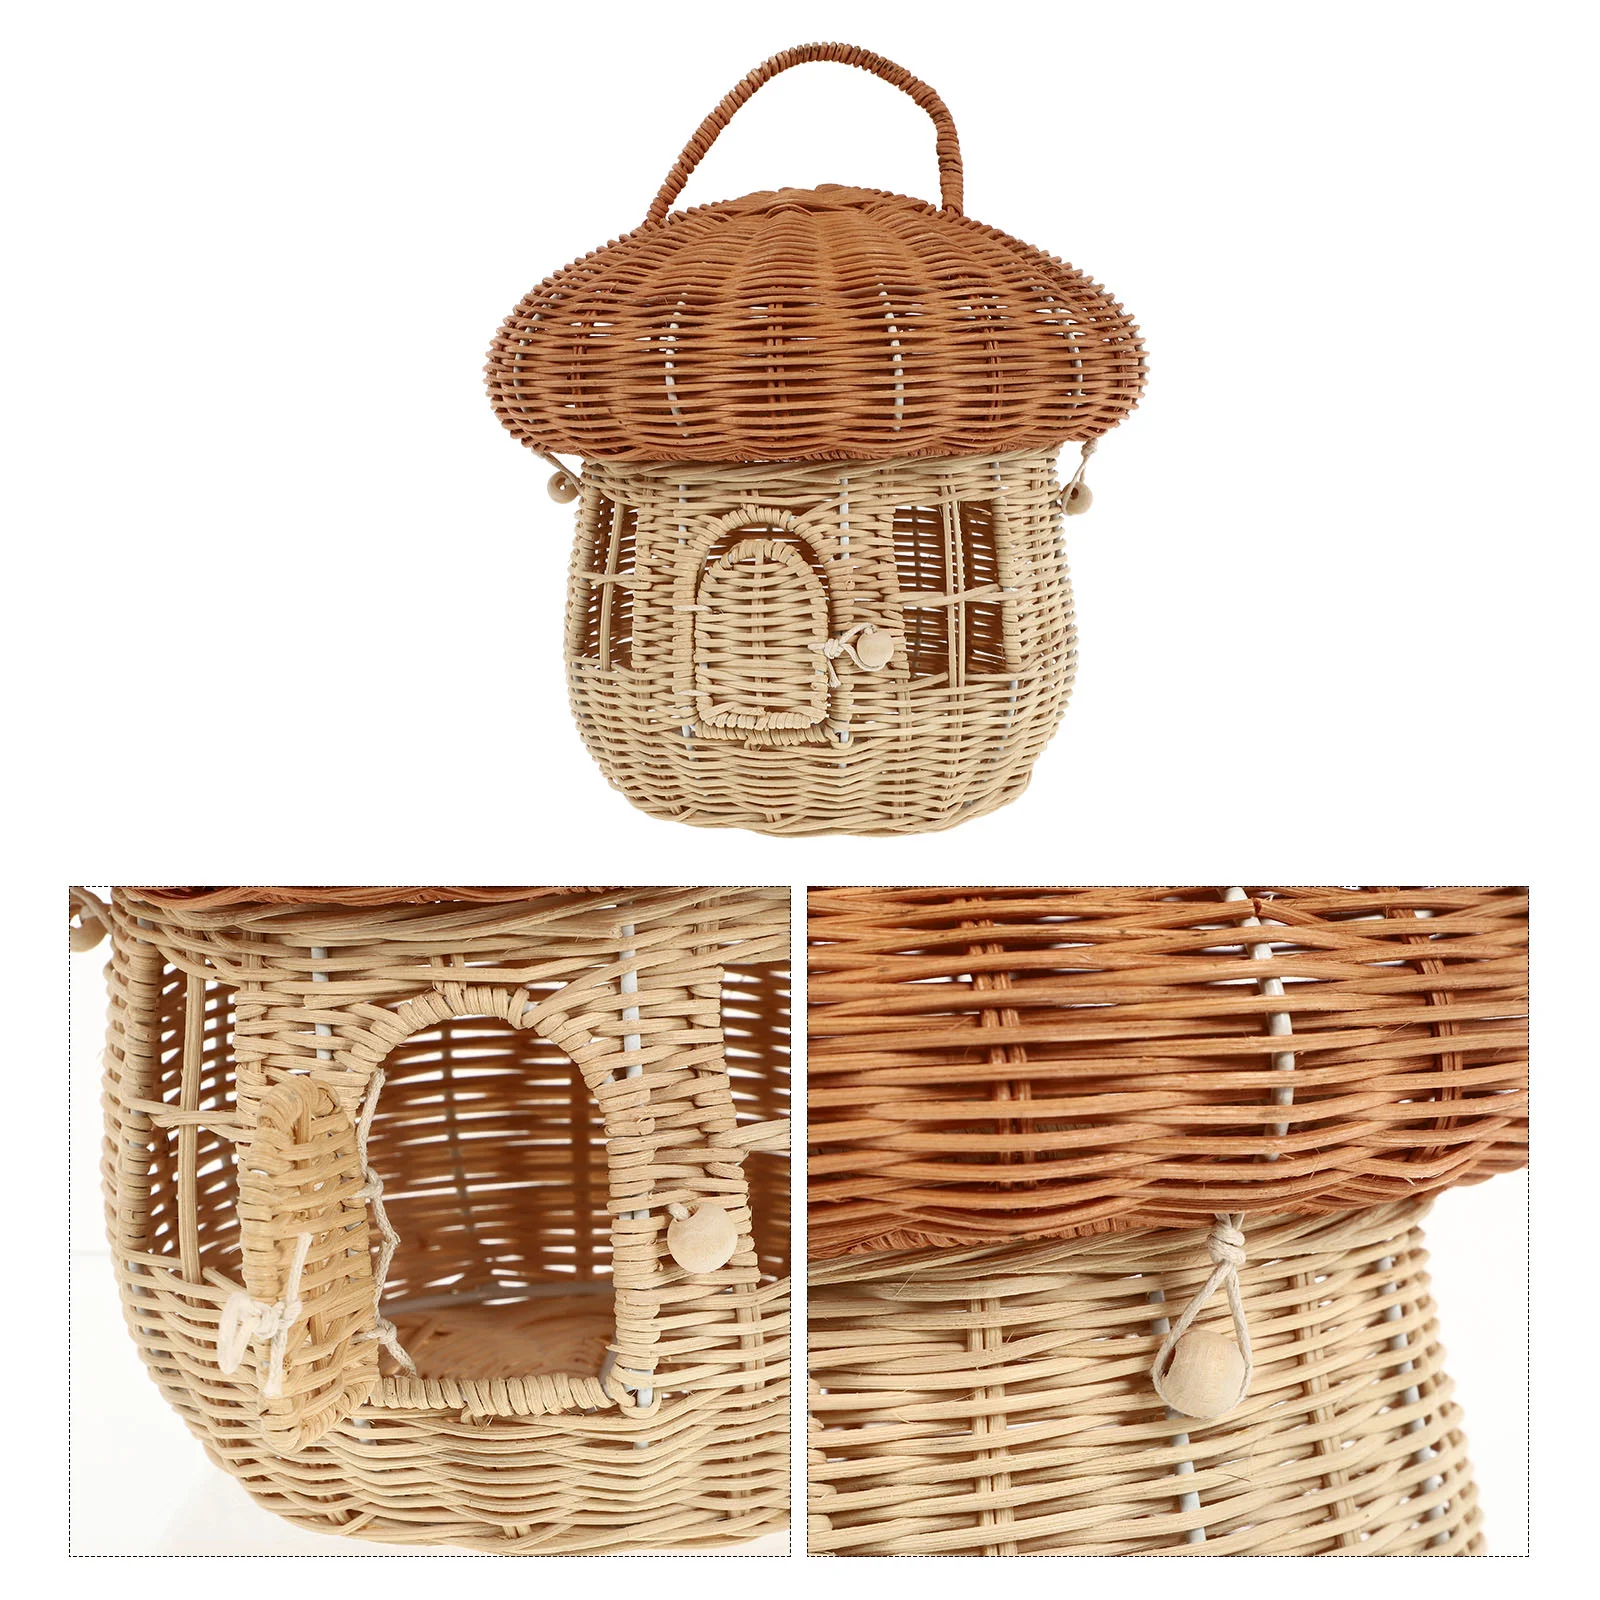 

Basket Storage Rattan Woven Baskets Wicker Mushroomlid Serving Seagrass Fruit Shelf Lidded Picnic Bread Sundries Organizer Tray